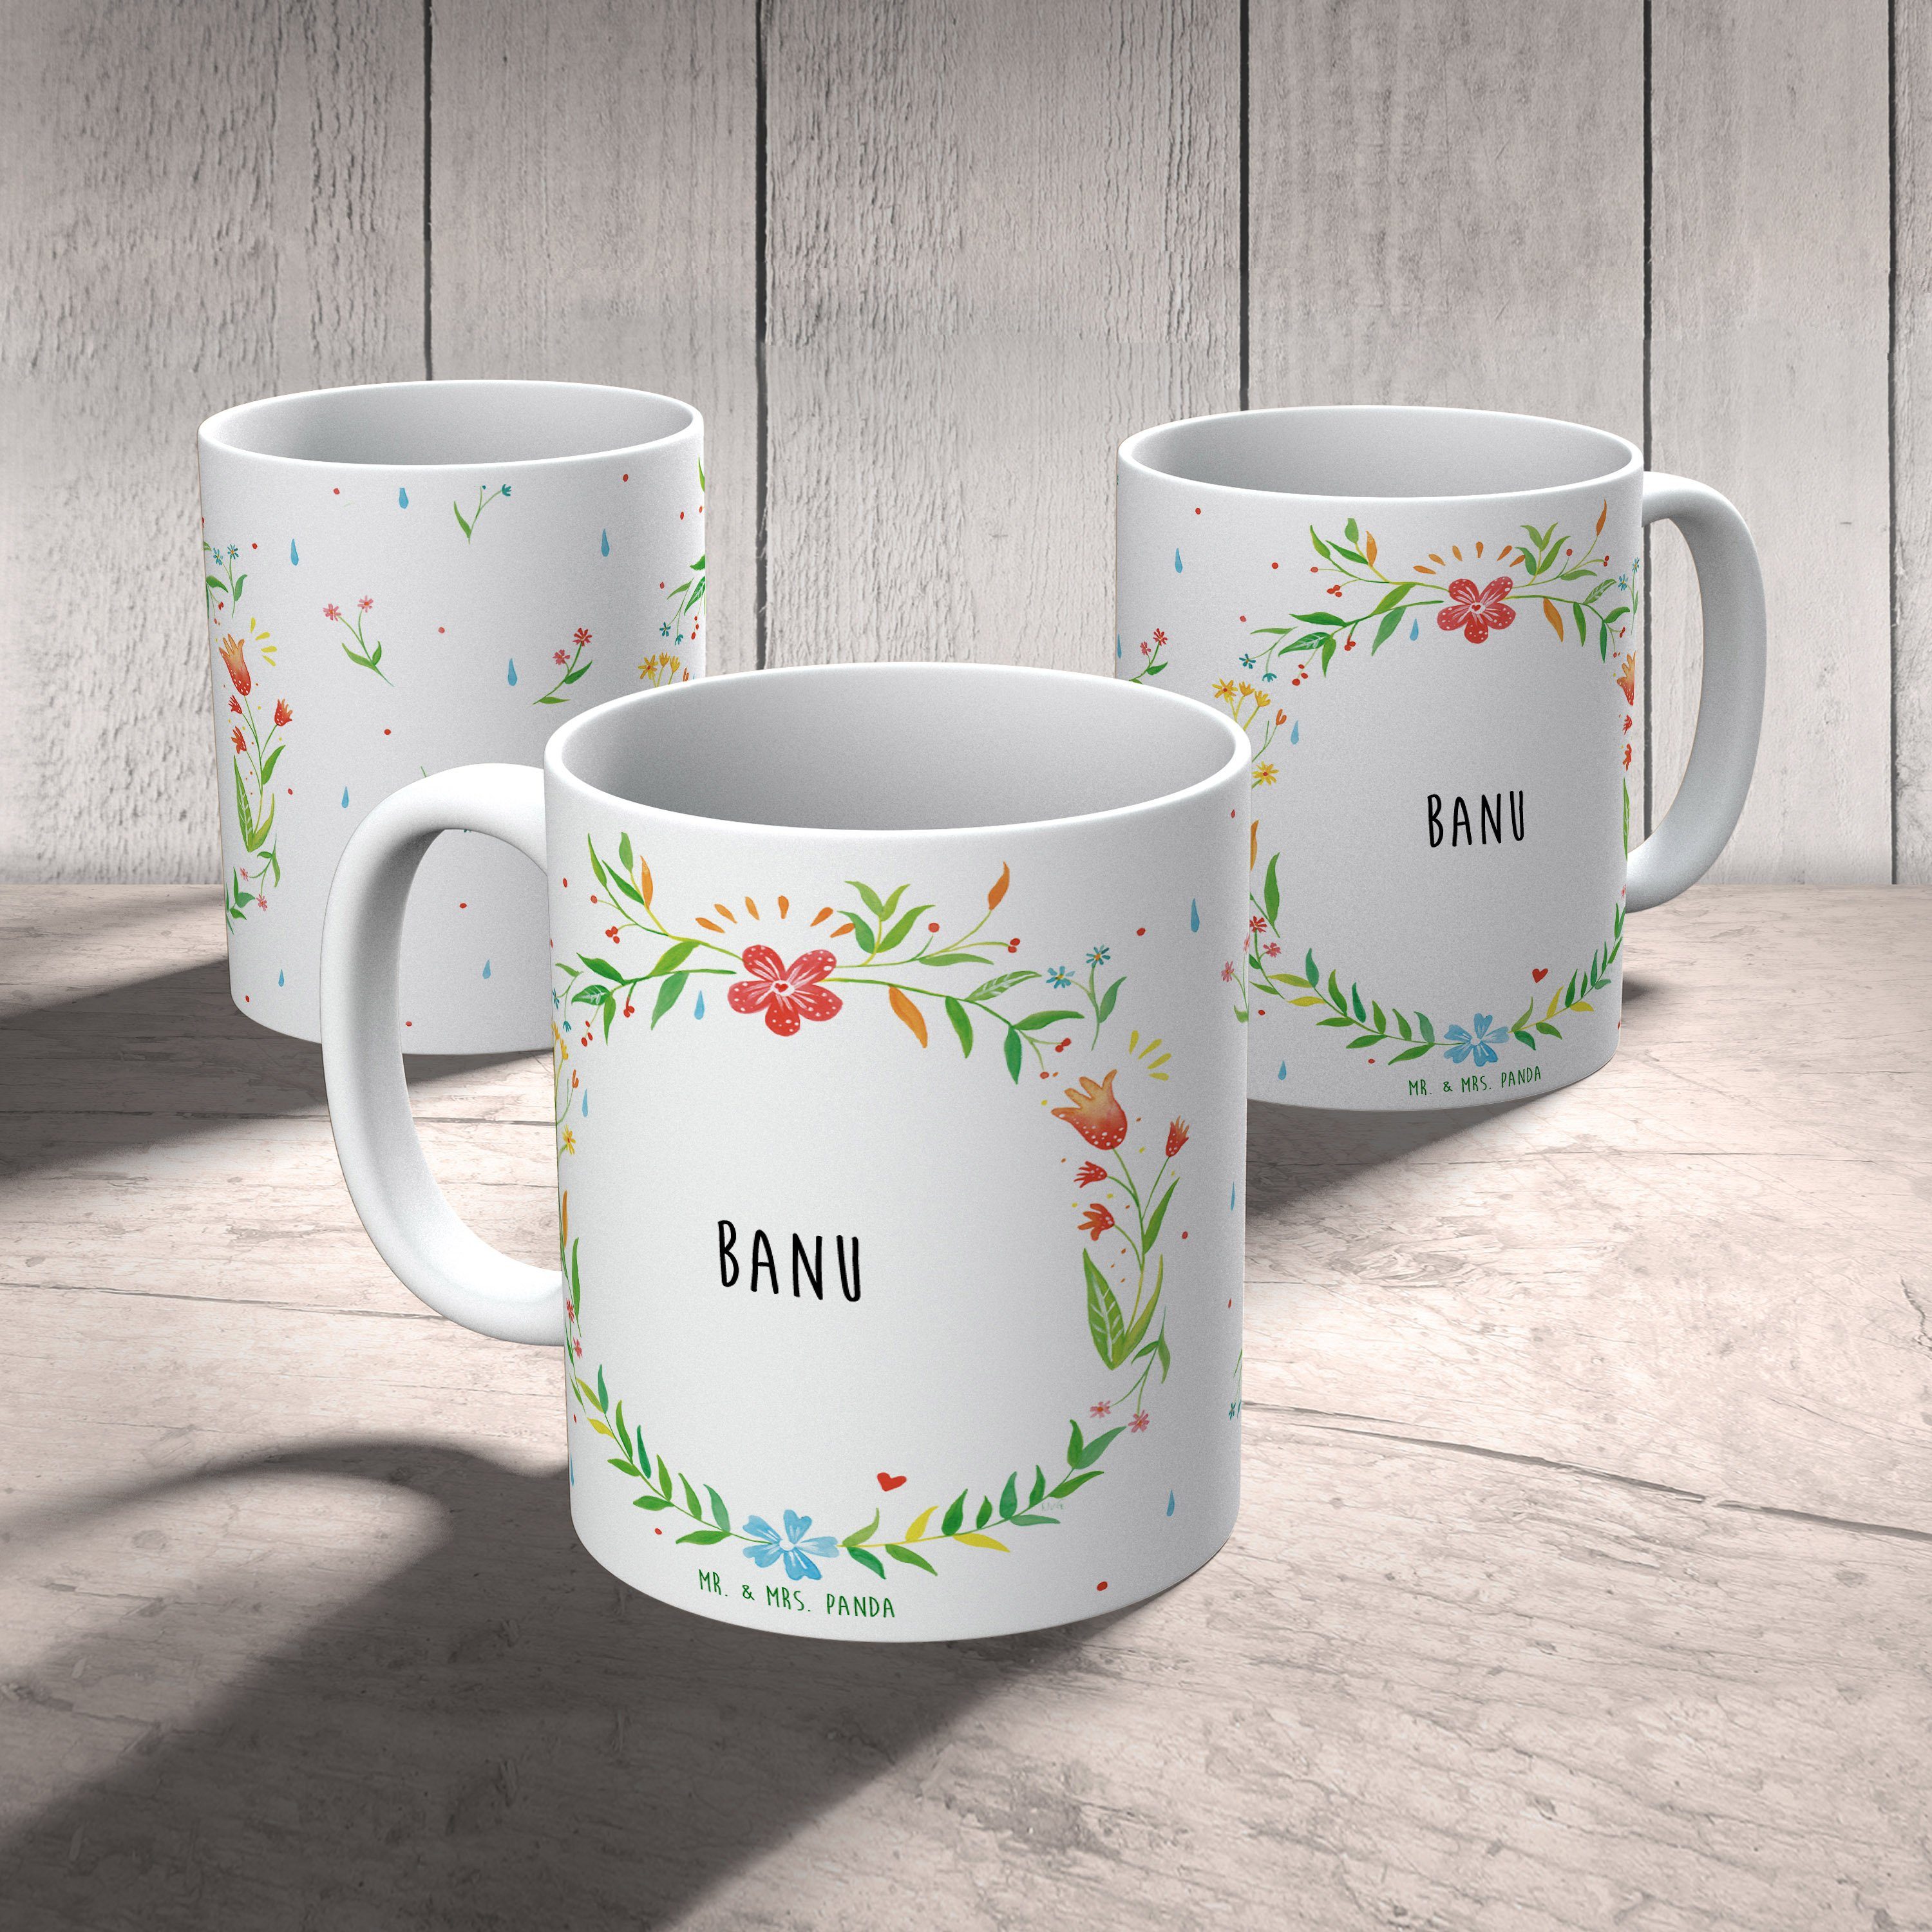 Mr. & Mrs. Panda Tasse Porzellan, Keramik Tasse, Keramiktasse, - Banu Büro Tasse, Geschenk, Teetasse